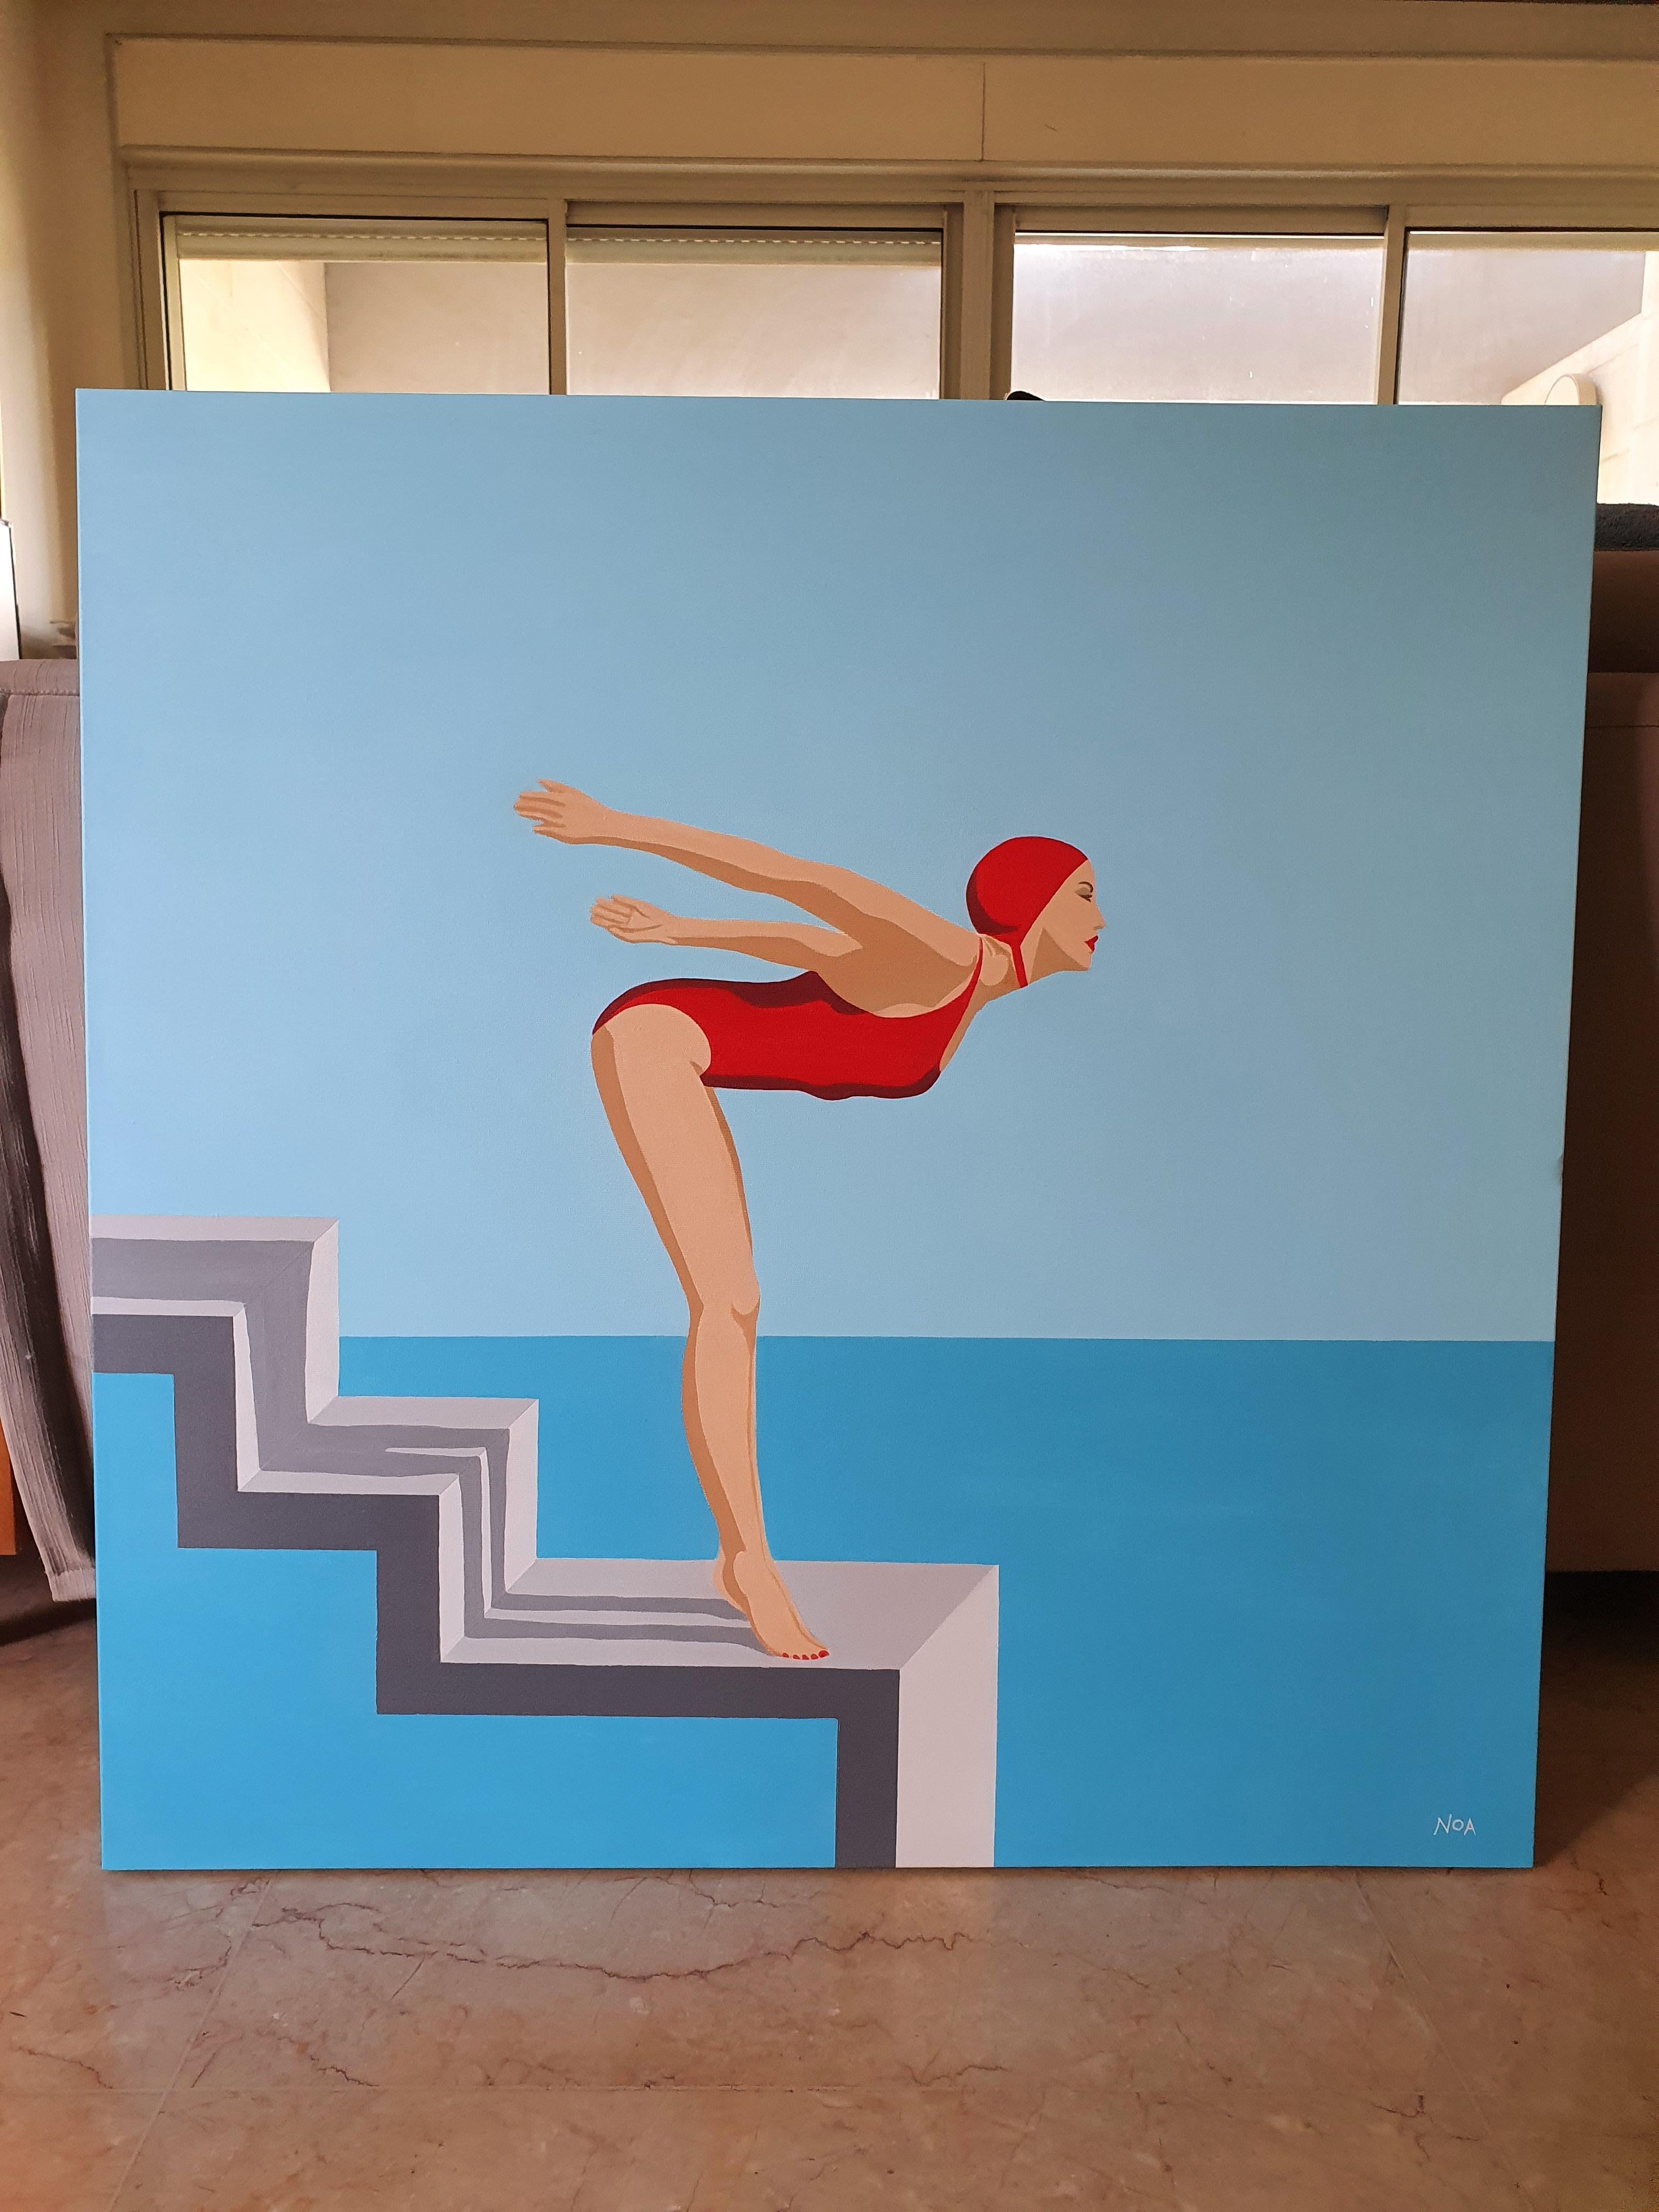 Stairway to heaven - contemporary minimalist painting - Contemporary Painting by Noa Havatzelet